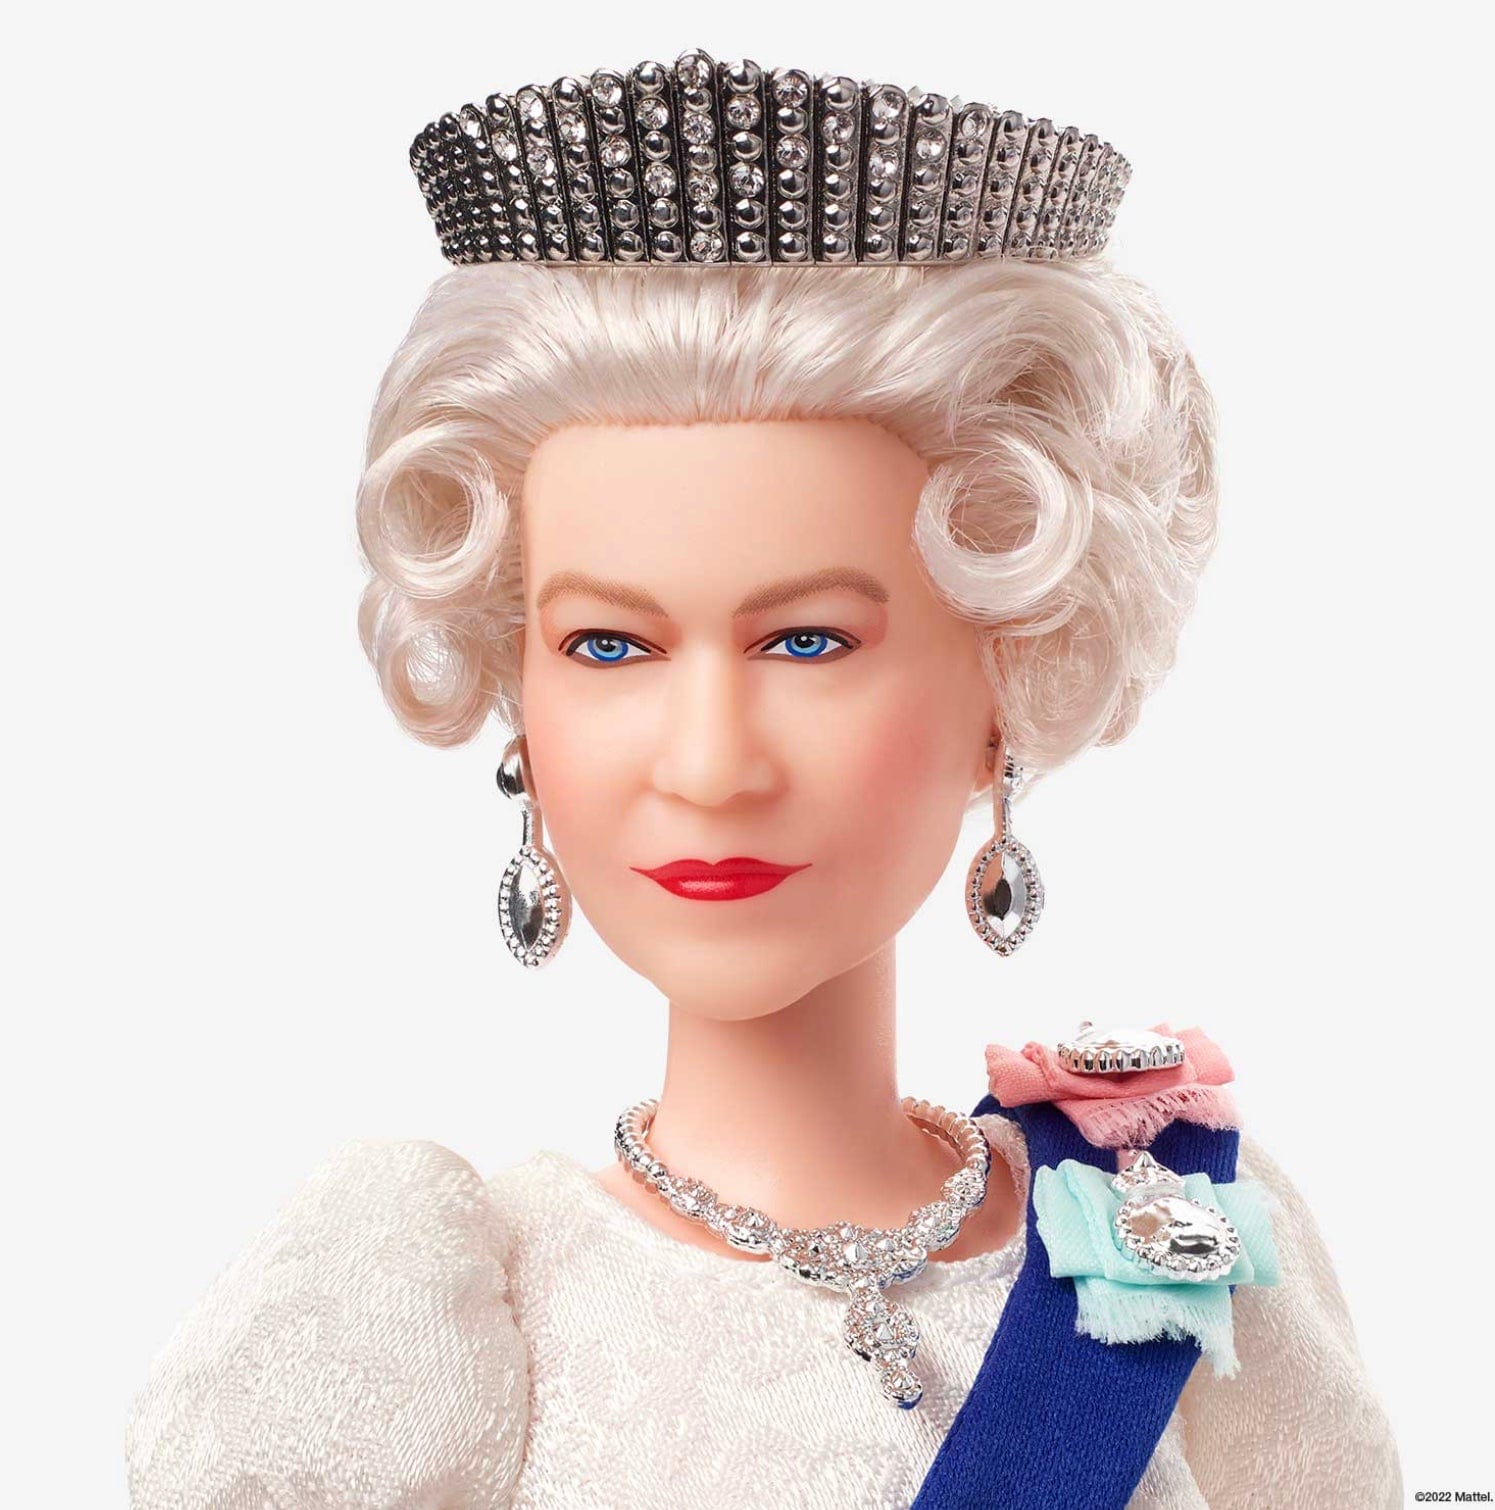 Barbie Signature Queen Elizabeth II Platinum Jubilee Doll